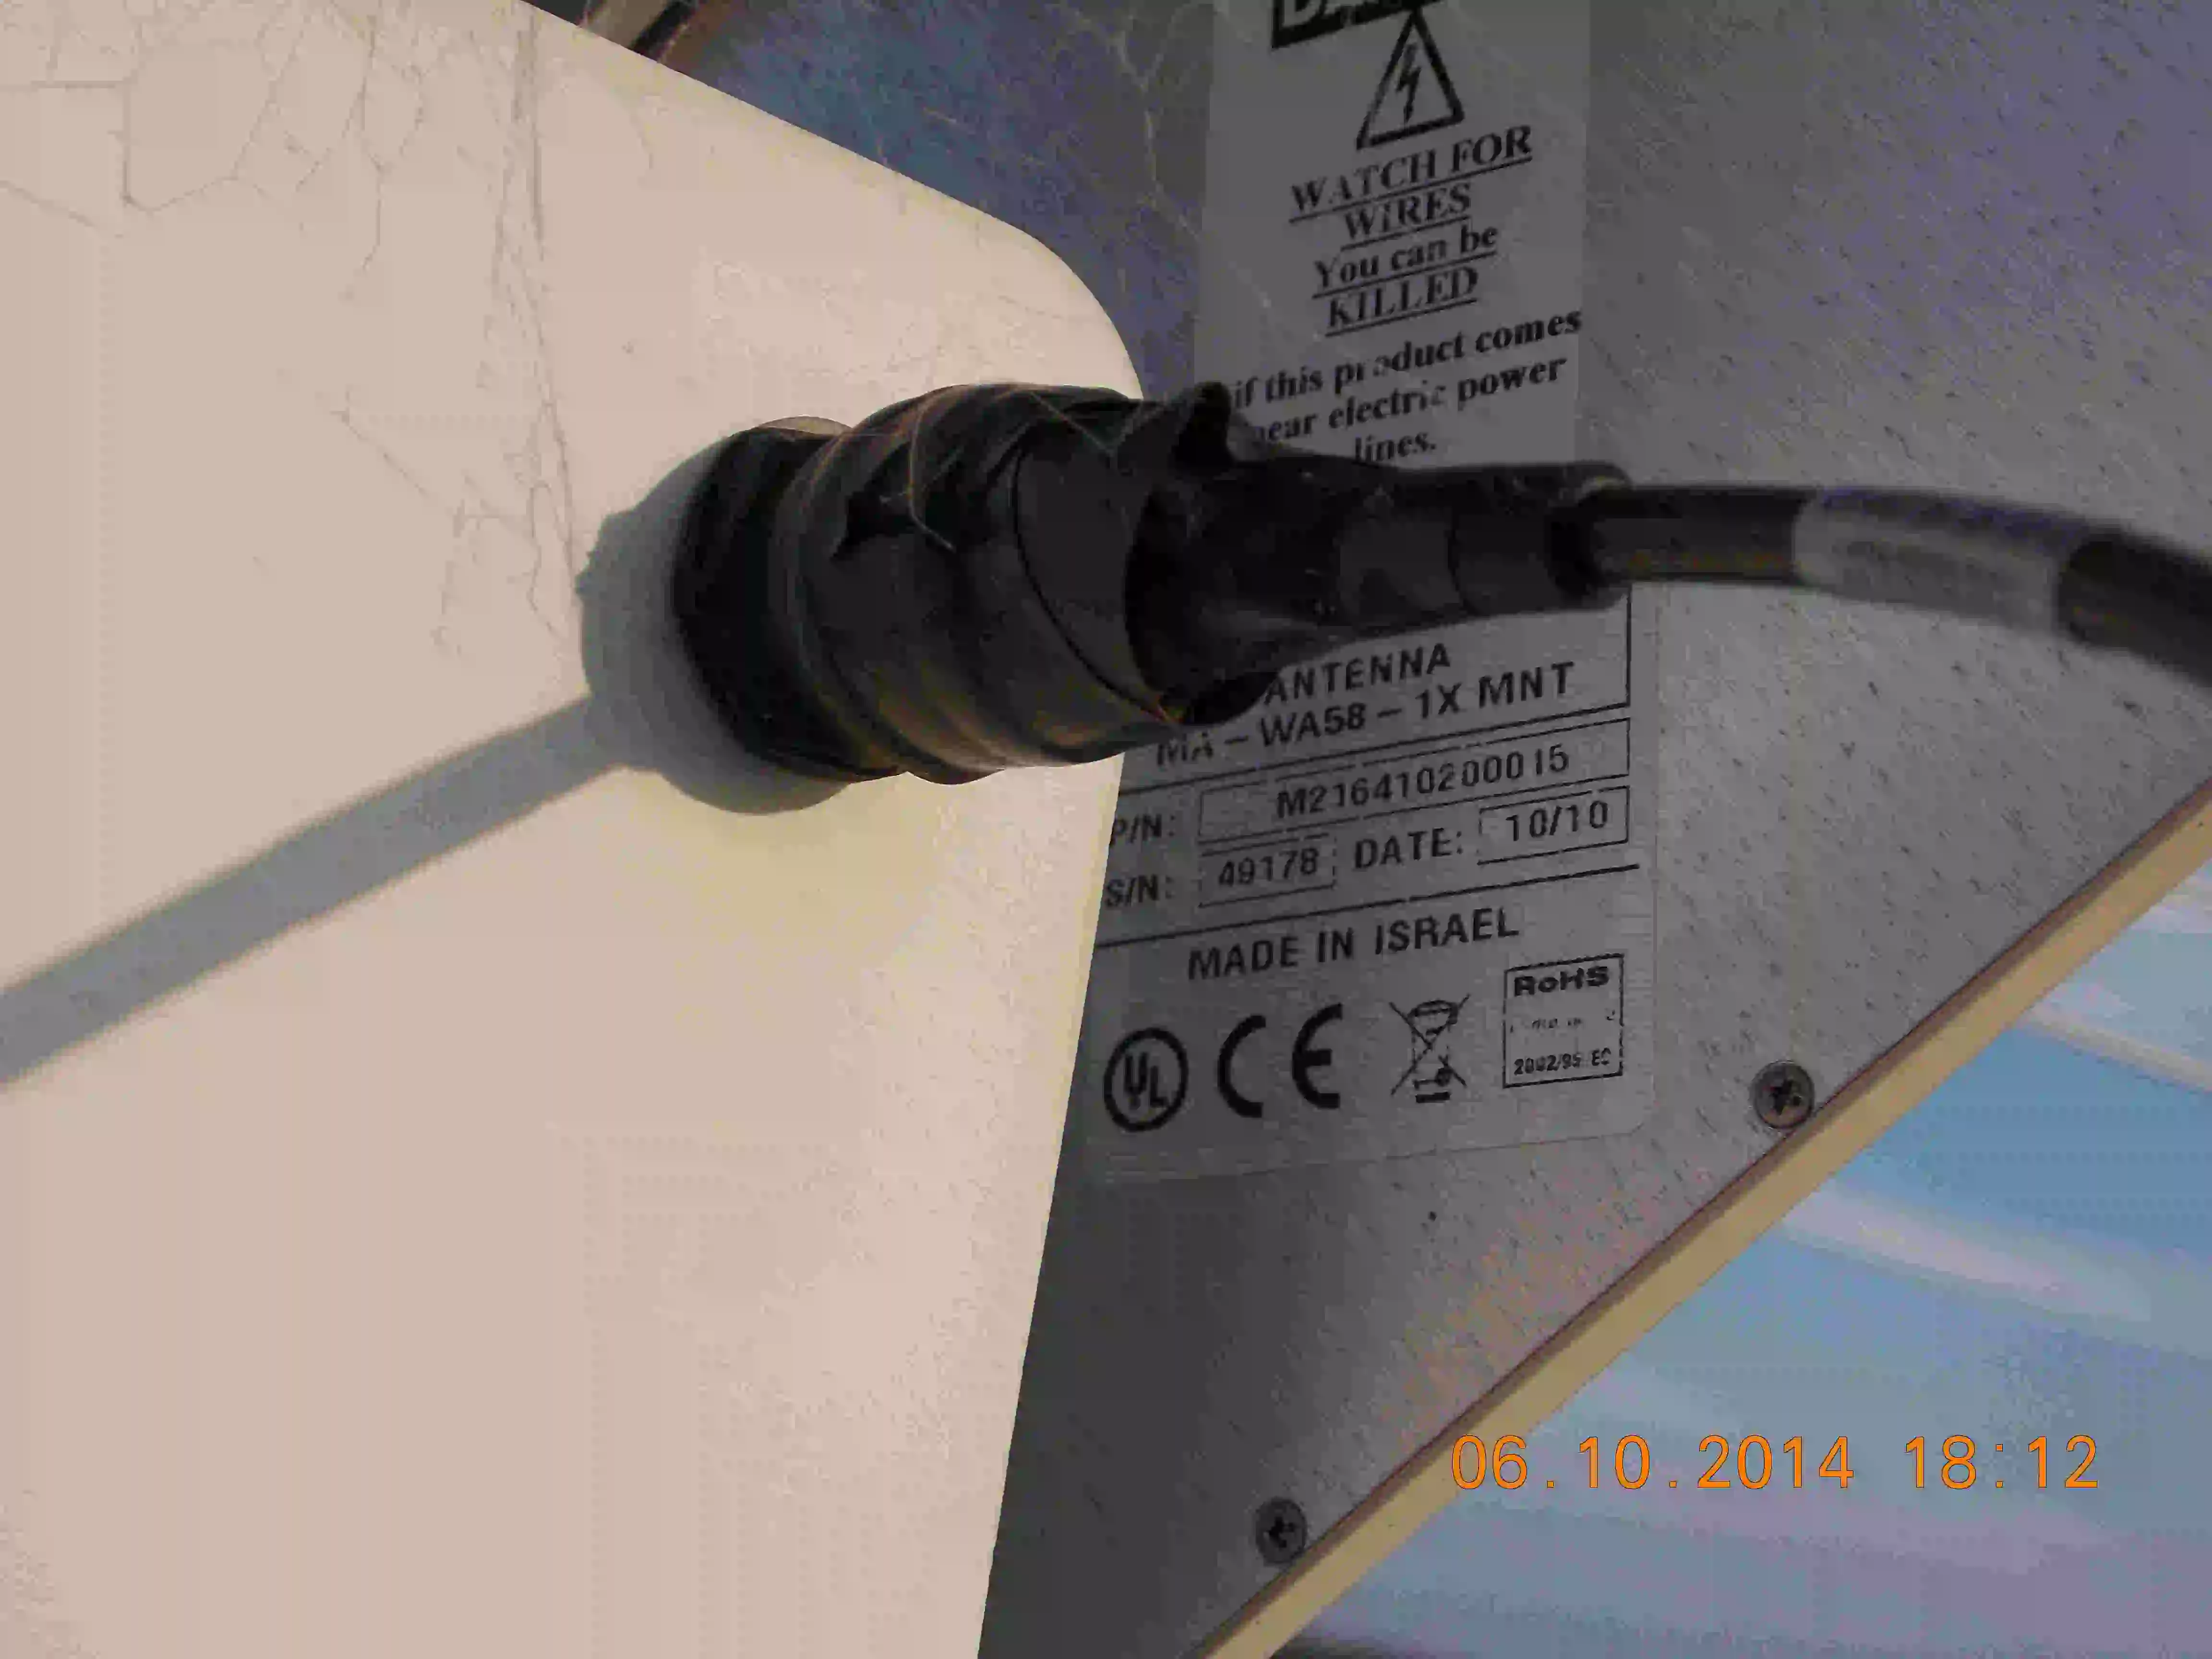 SP52948-BigAir-running-illegal-wireless-services-on-roof-Block-C-photo-1-6Oct2014